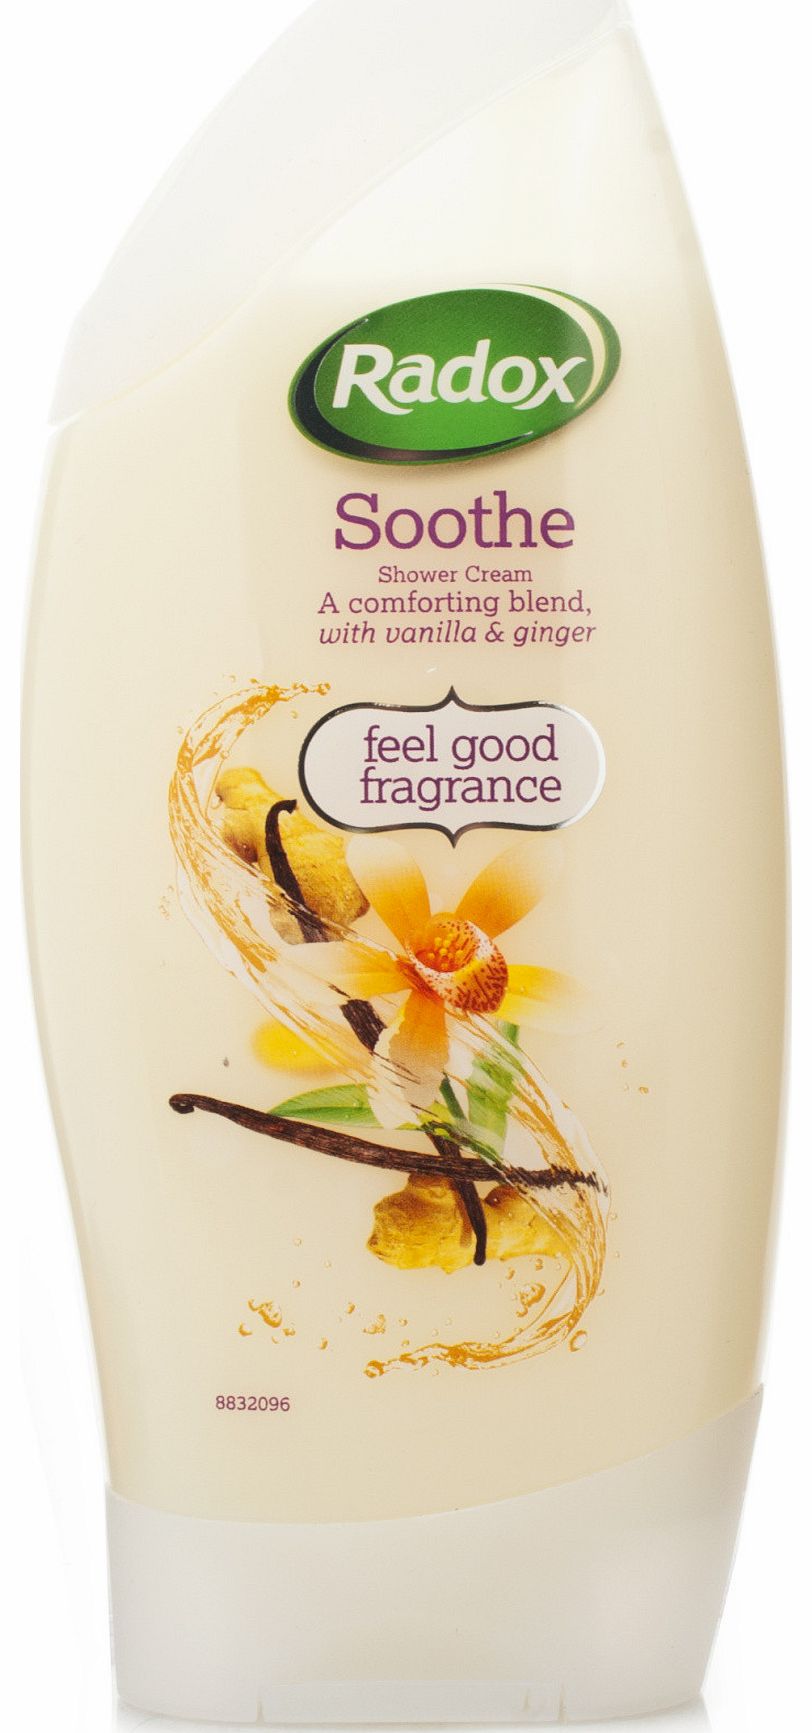 Soothe Shower Cream